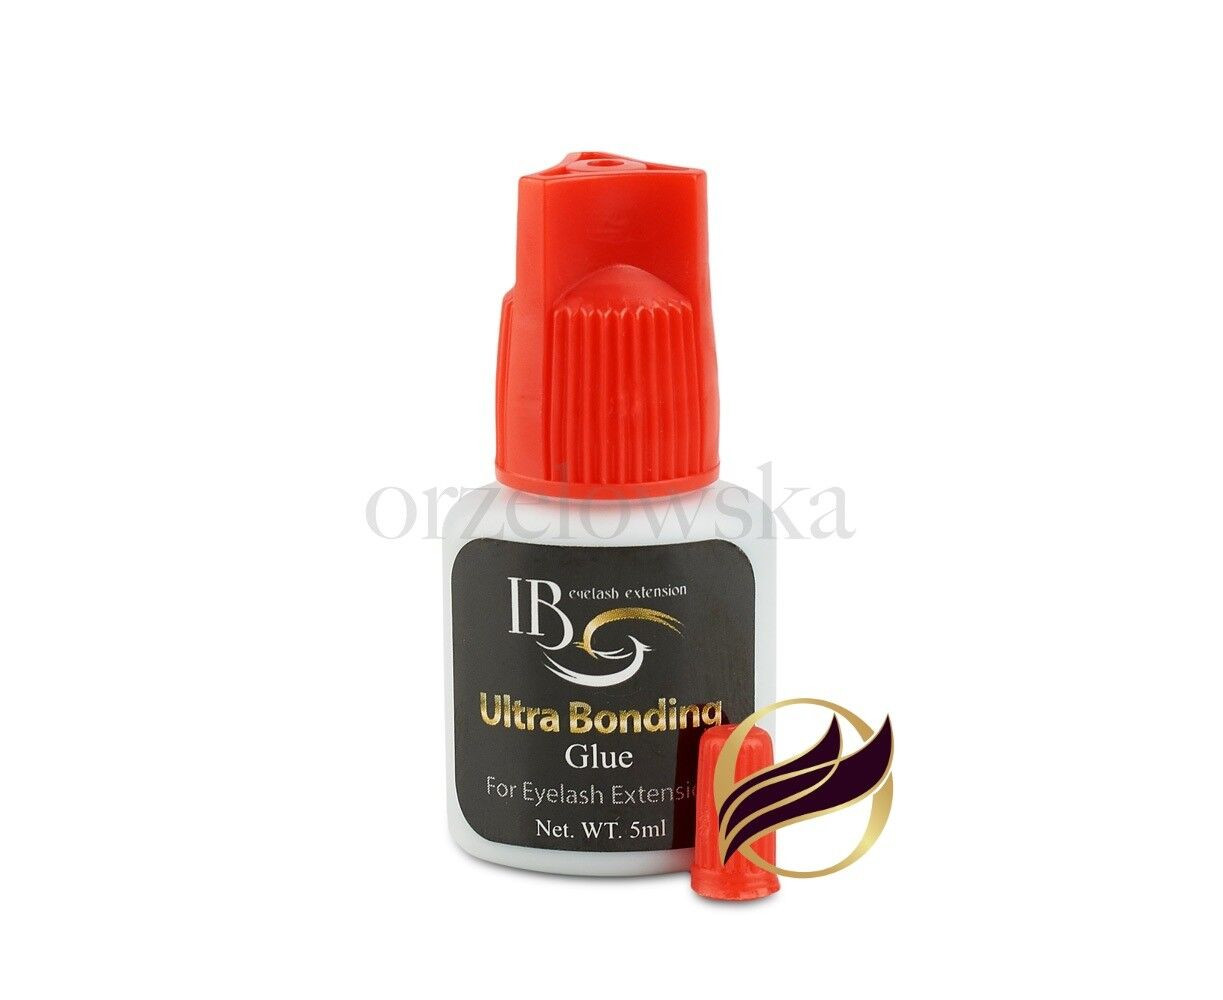 Ultra Bonding Glue 5ml, drying time 2-3 sec, iBeauty, Universal adhesive for eyelash extensions